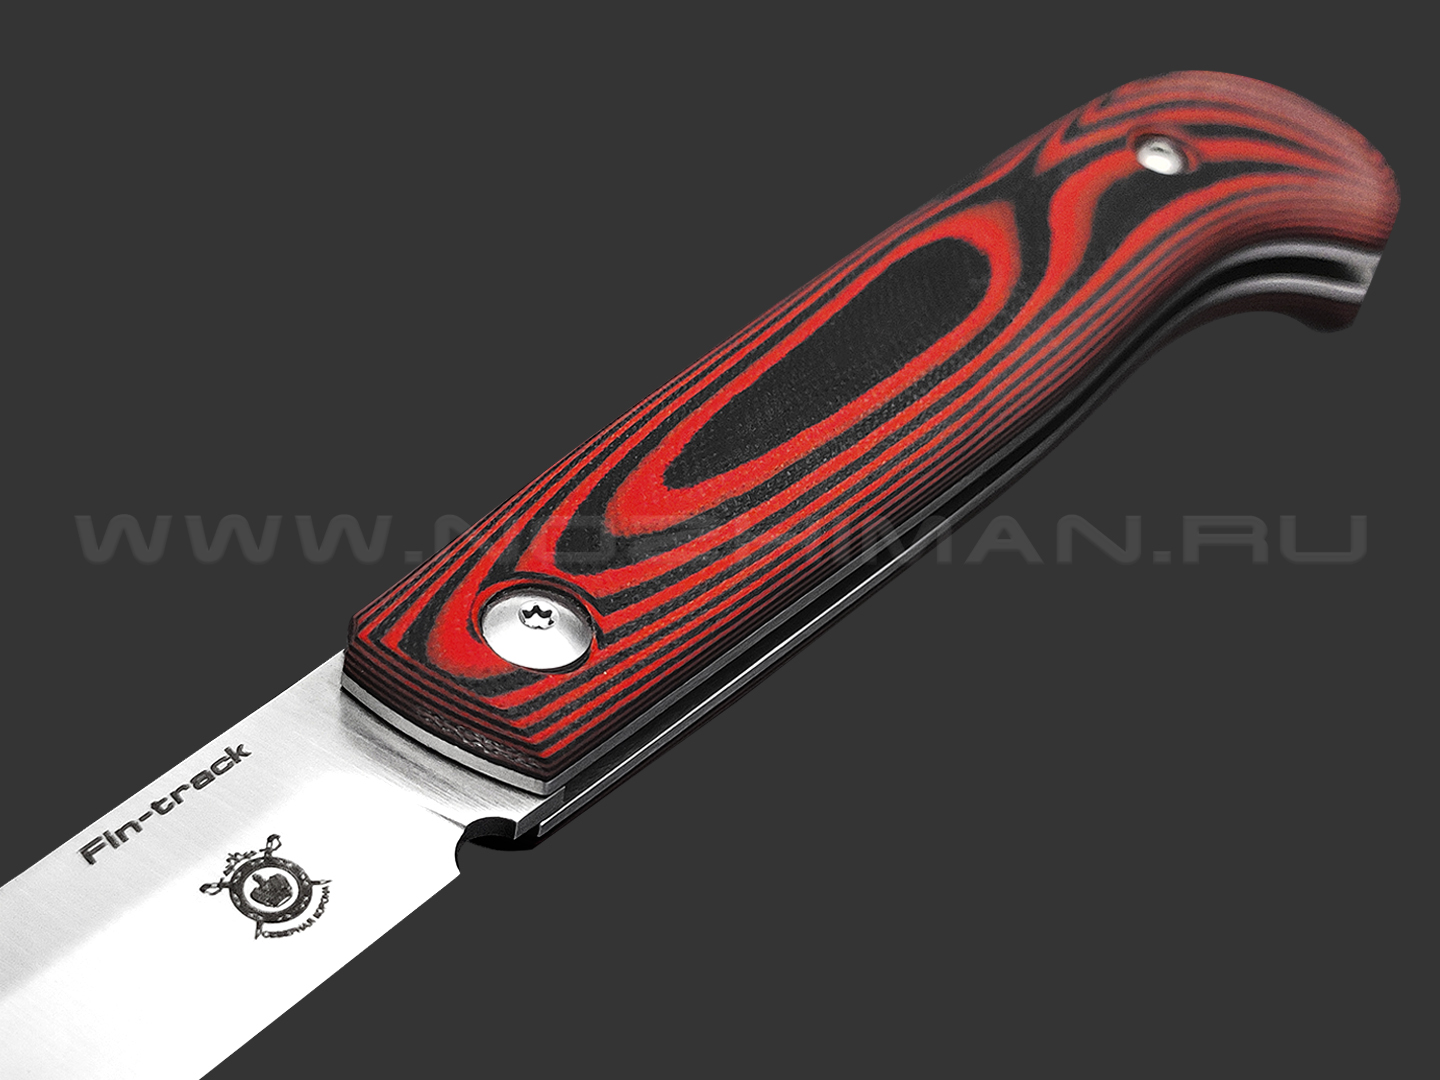 Северная корона складной нож Fin-Track сталь Aus-10 satin, рукоять G10 black & red